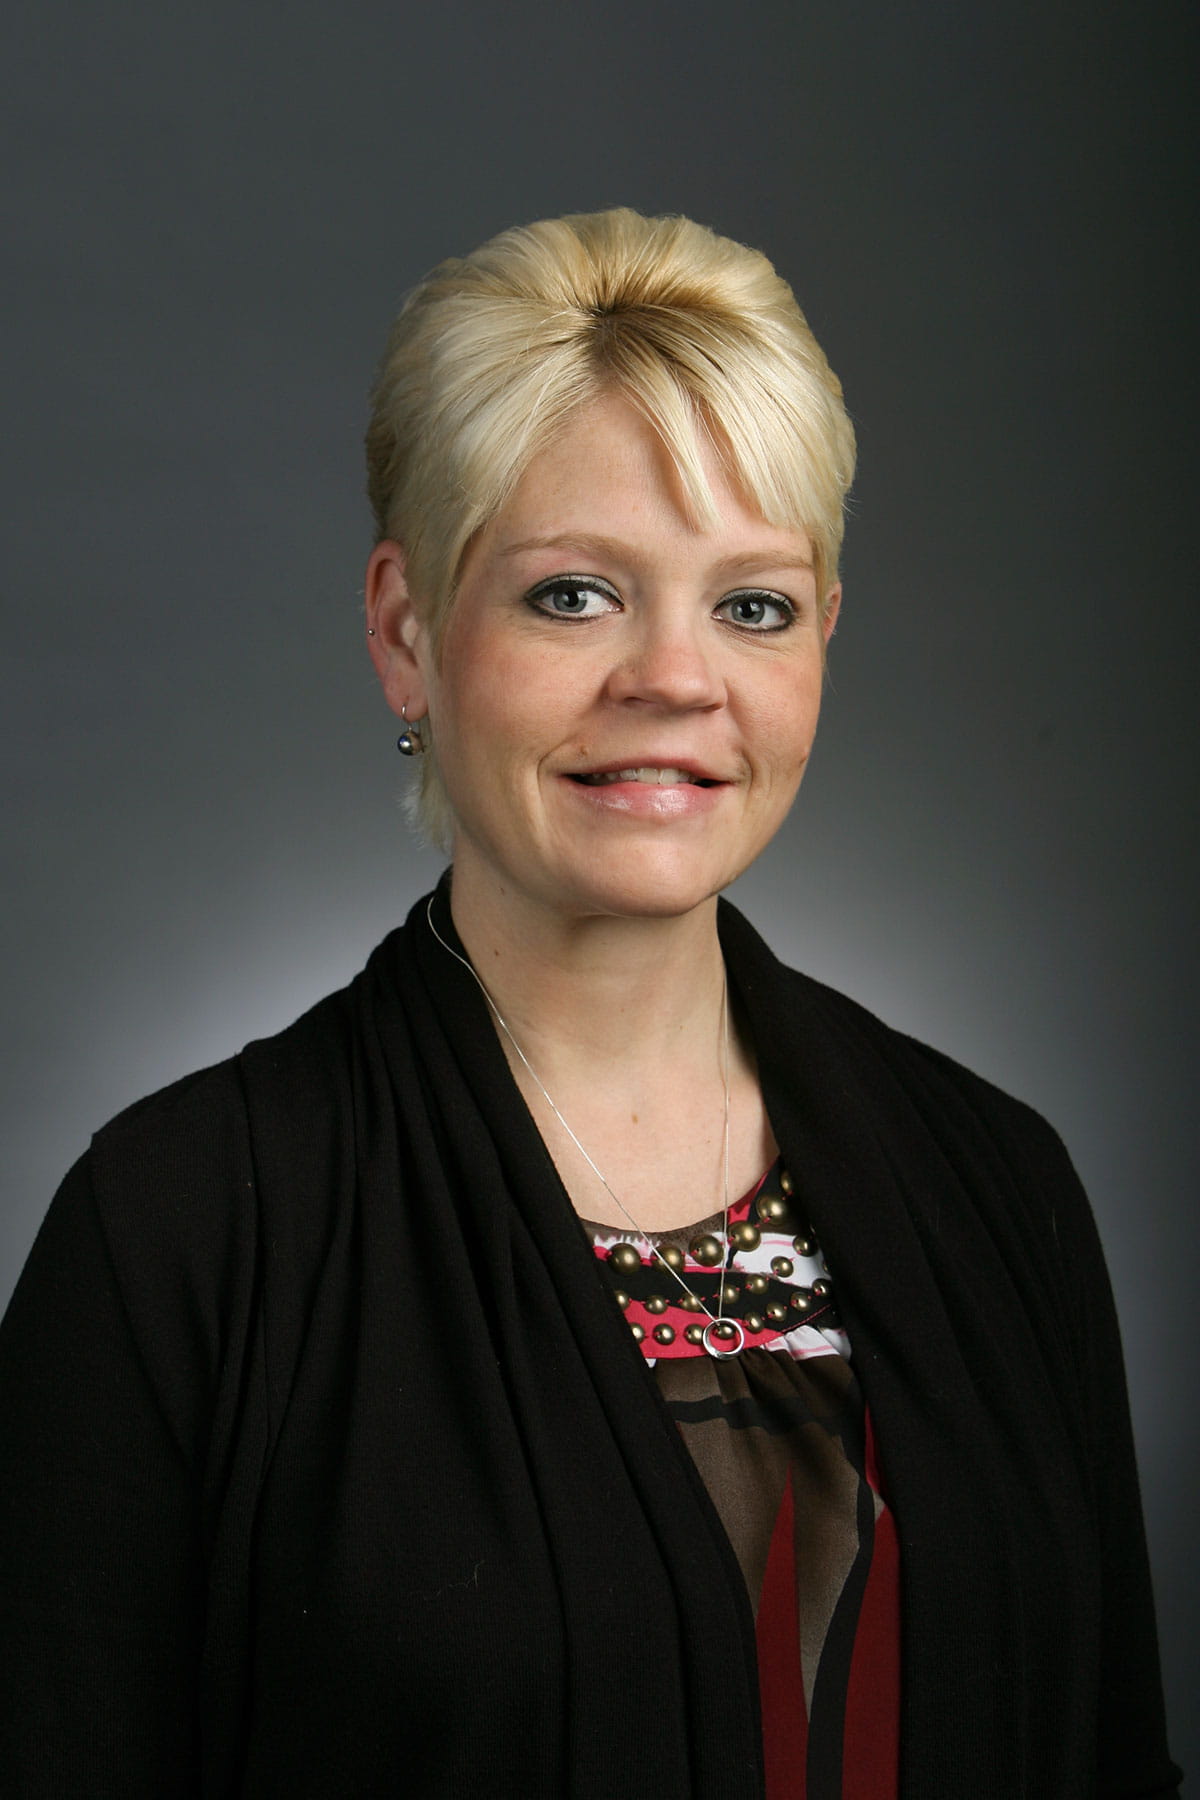 A photo of Kristi Van Vranken.